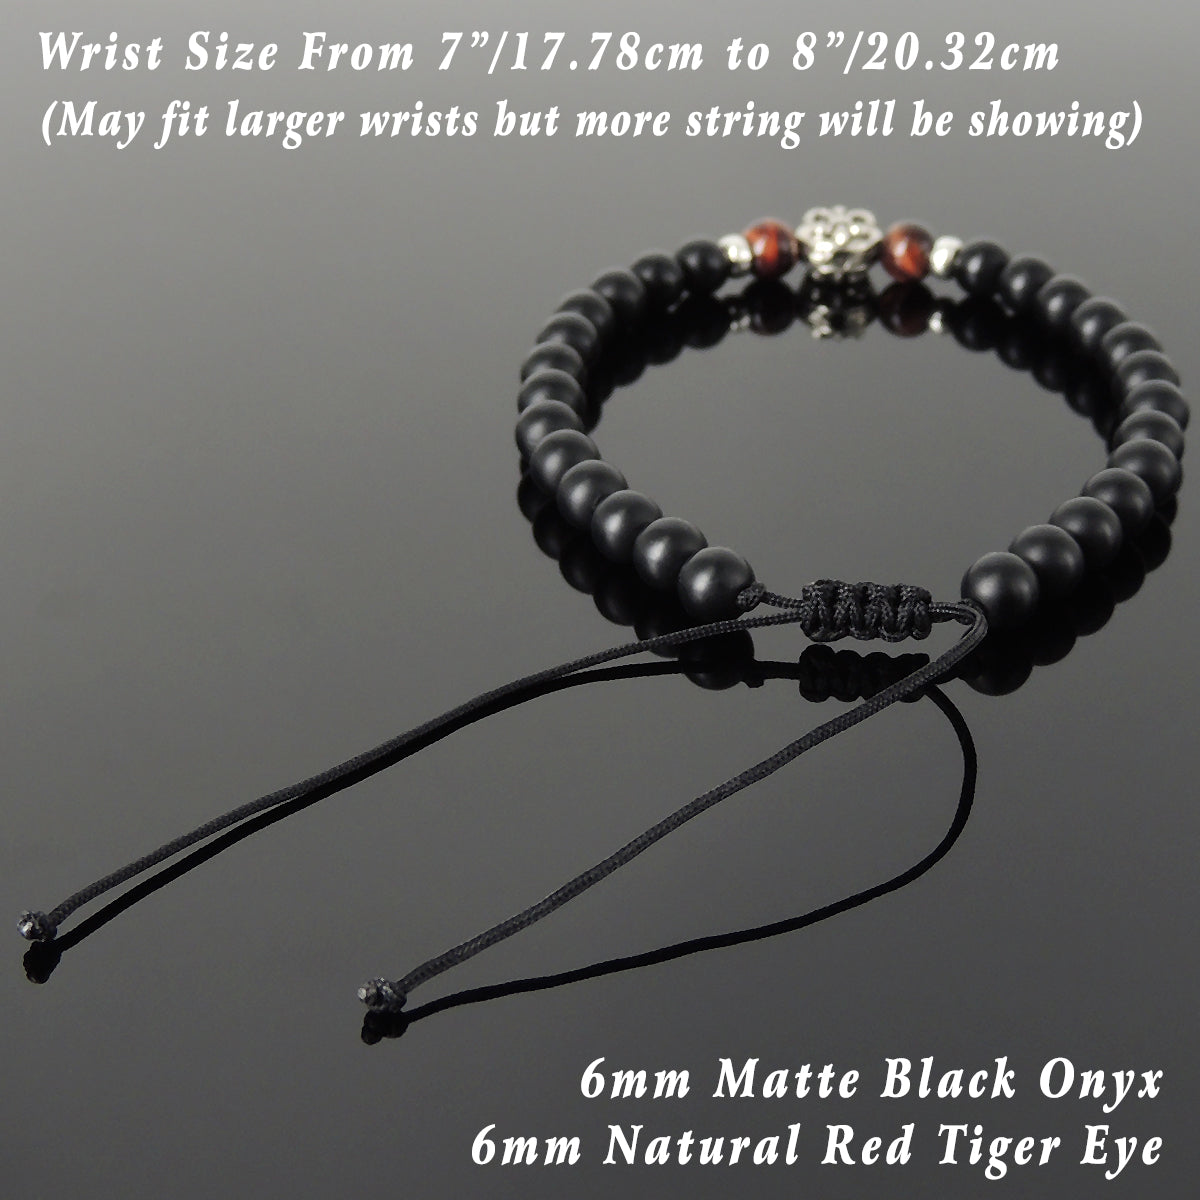 6mm Red Tiger Eye & Matte Black Onyx Gemstone Adjustable Braided Bracelet with S925 Sterling Silver Round Fleur de Lis Emblem Bead - Handmade by Gem & Silver BR1330